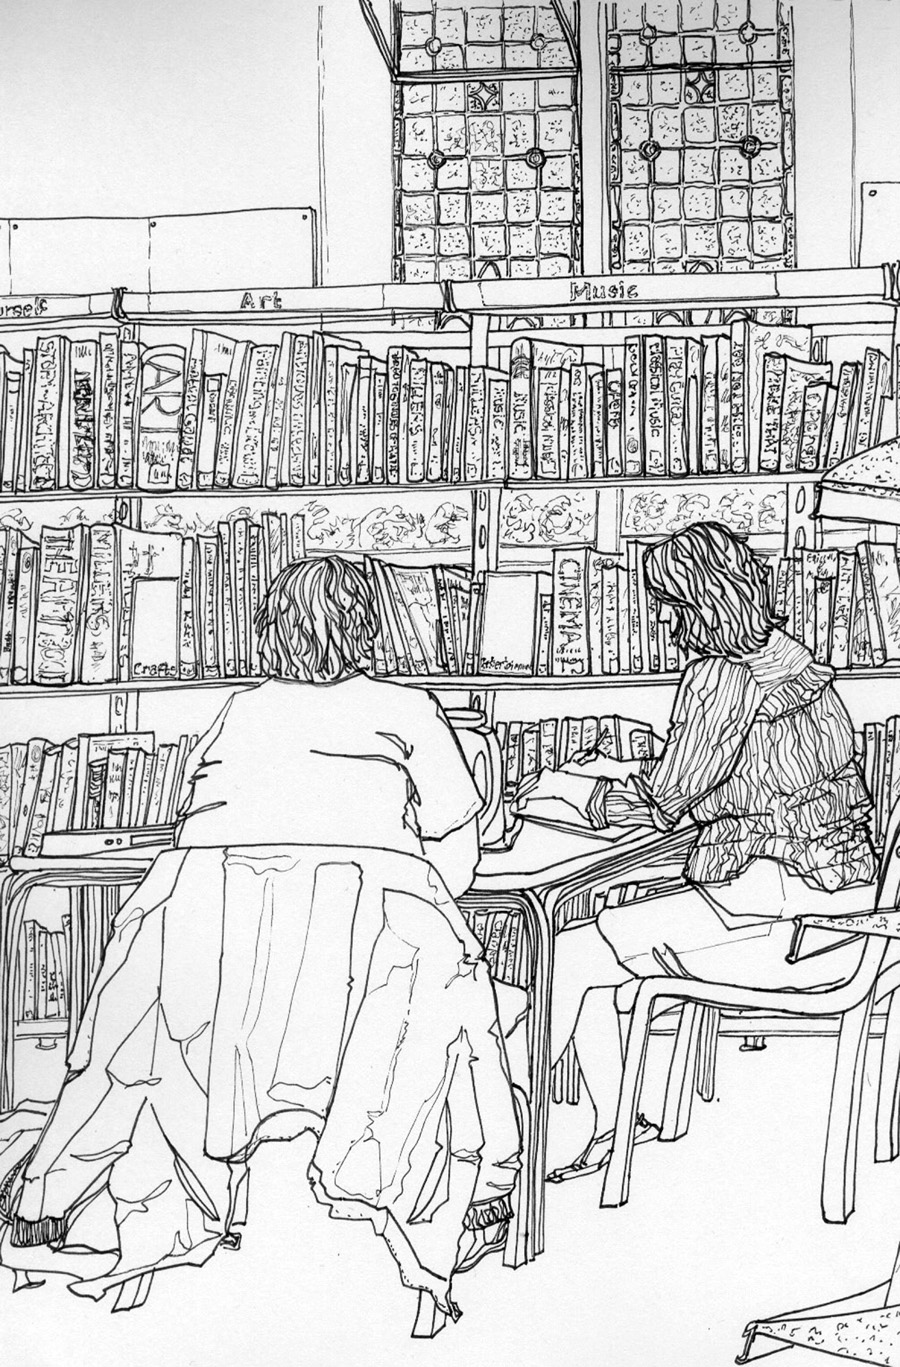 The Job Club, Frodsham Library 2012